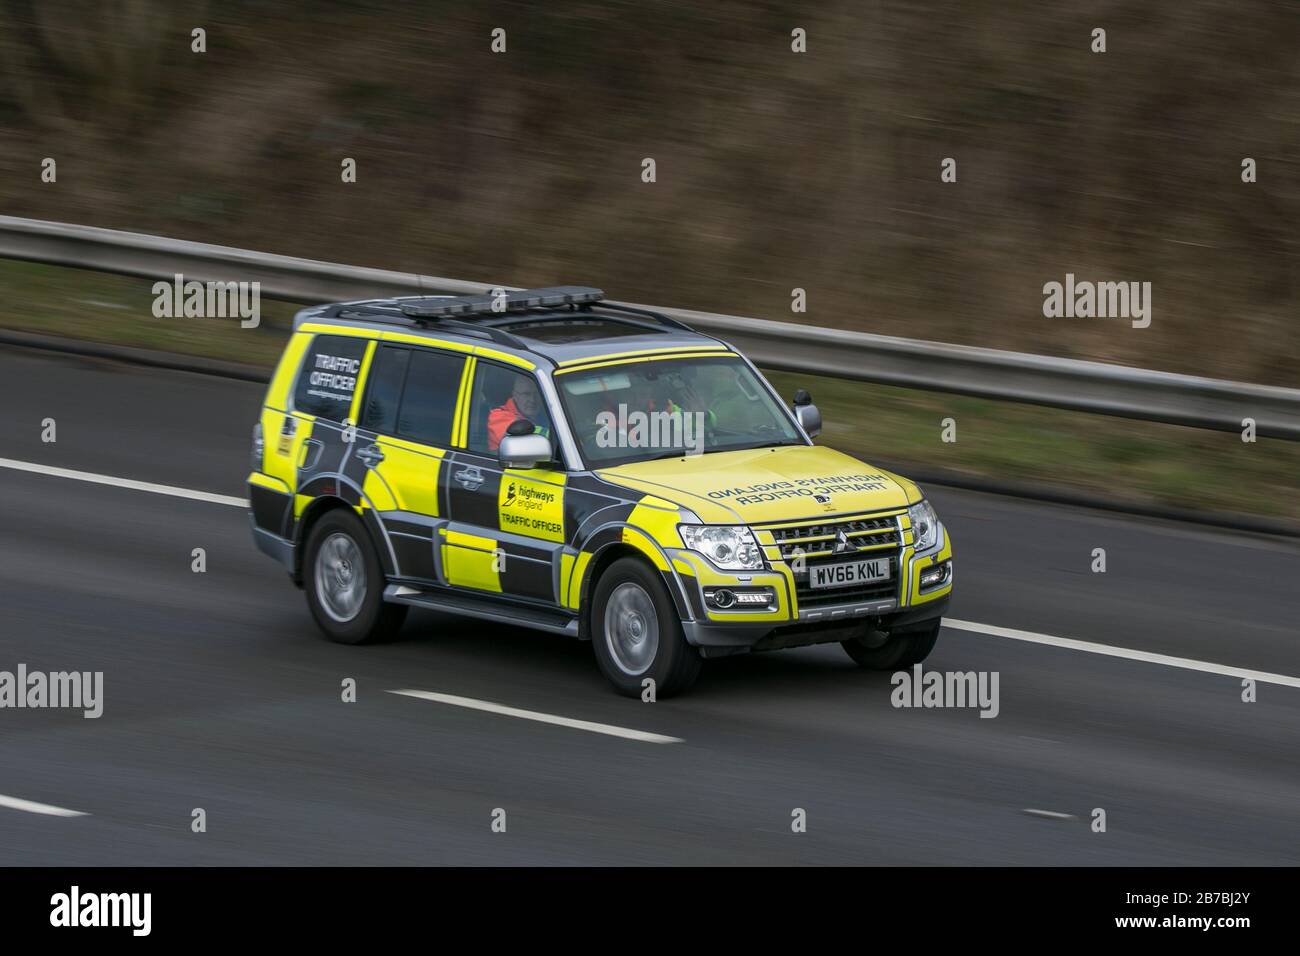 highways agency traffic officer patrolling the M6 motorway near Preston in Lancashire, UK Stock Photo